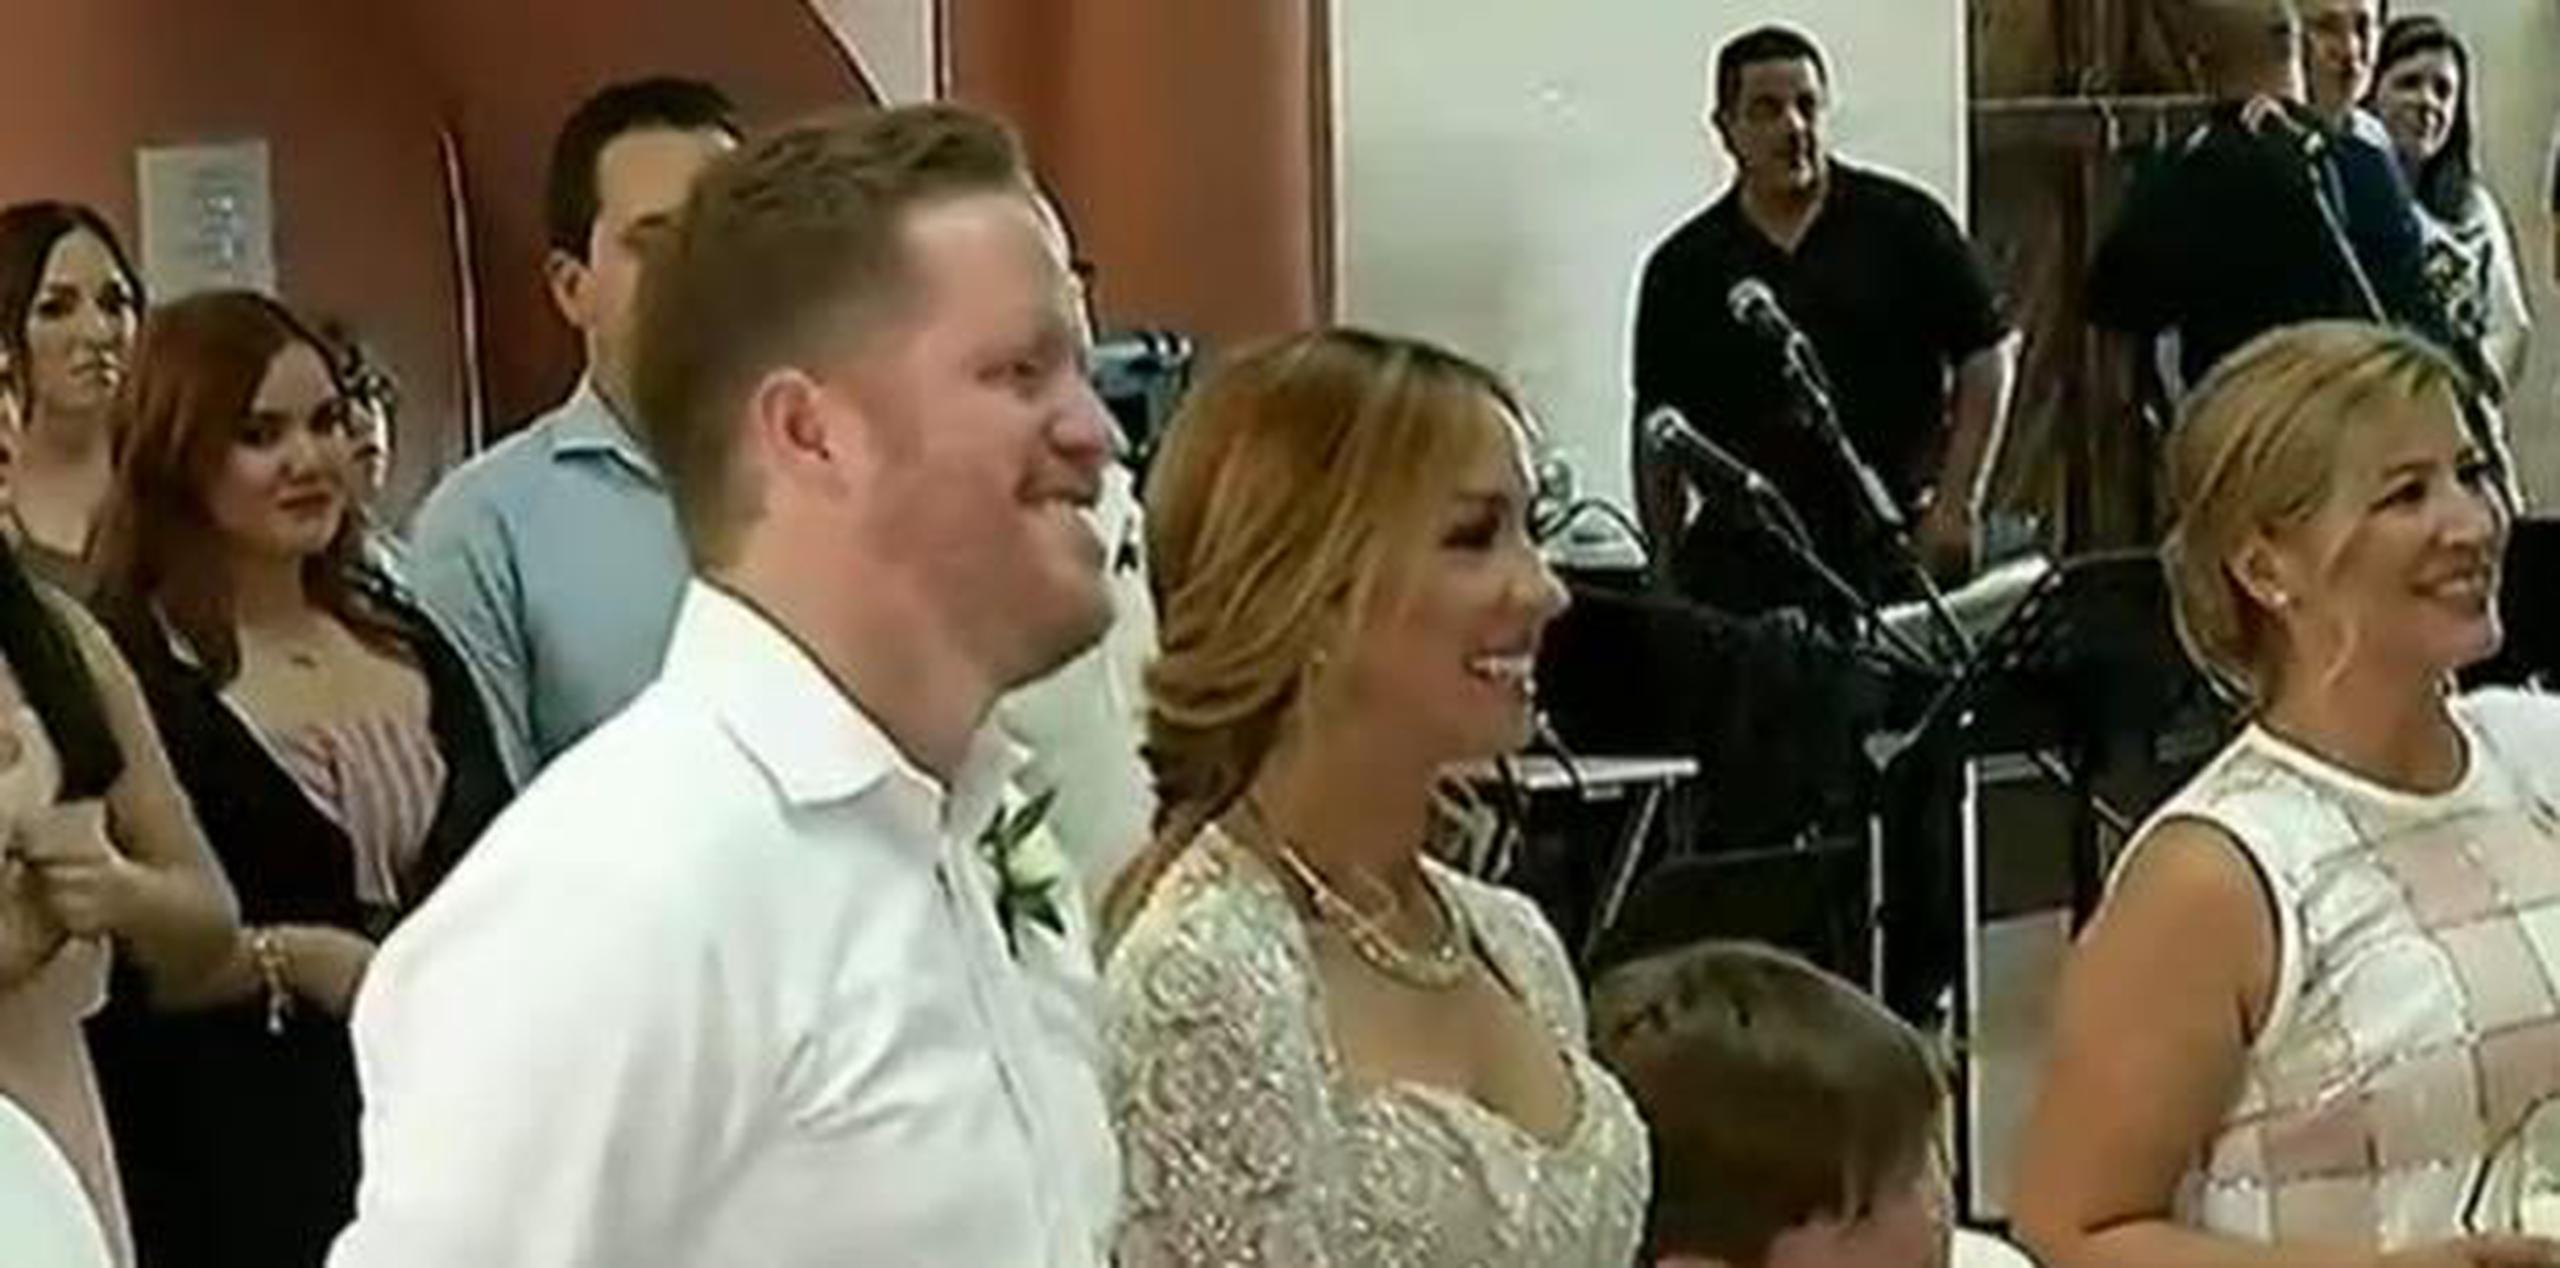 La boda fue sorpresa para Bernier. (Captura/Telemundo)